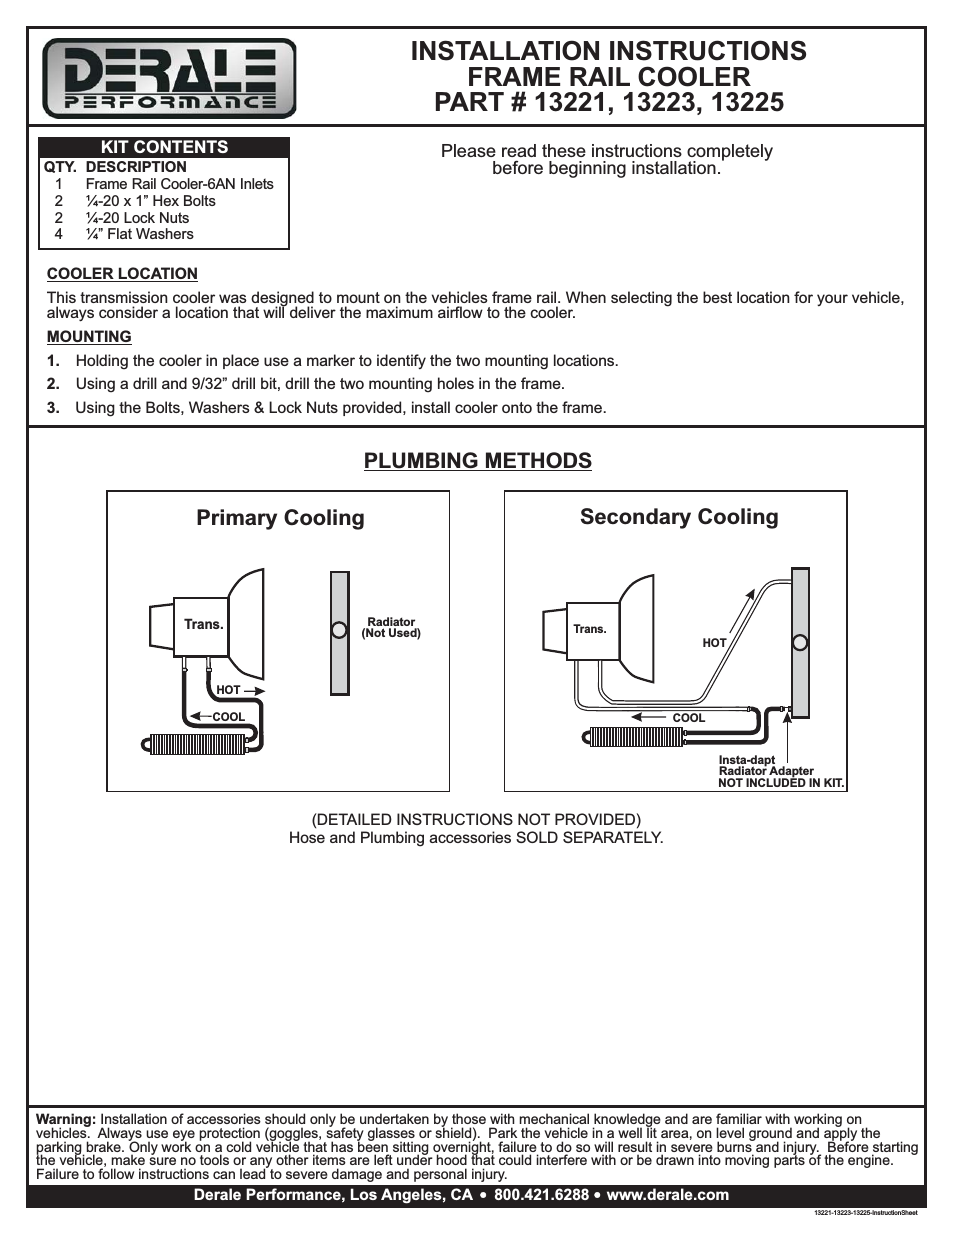 2 Pass 12" Series 7000 Copper_Aluminum Frame Rail Cooler (Page 1)